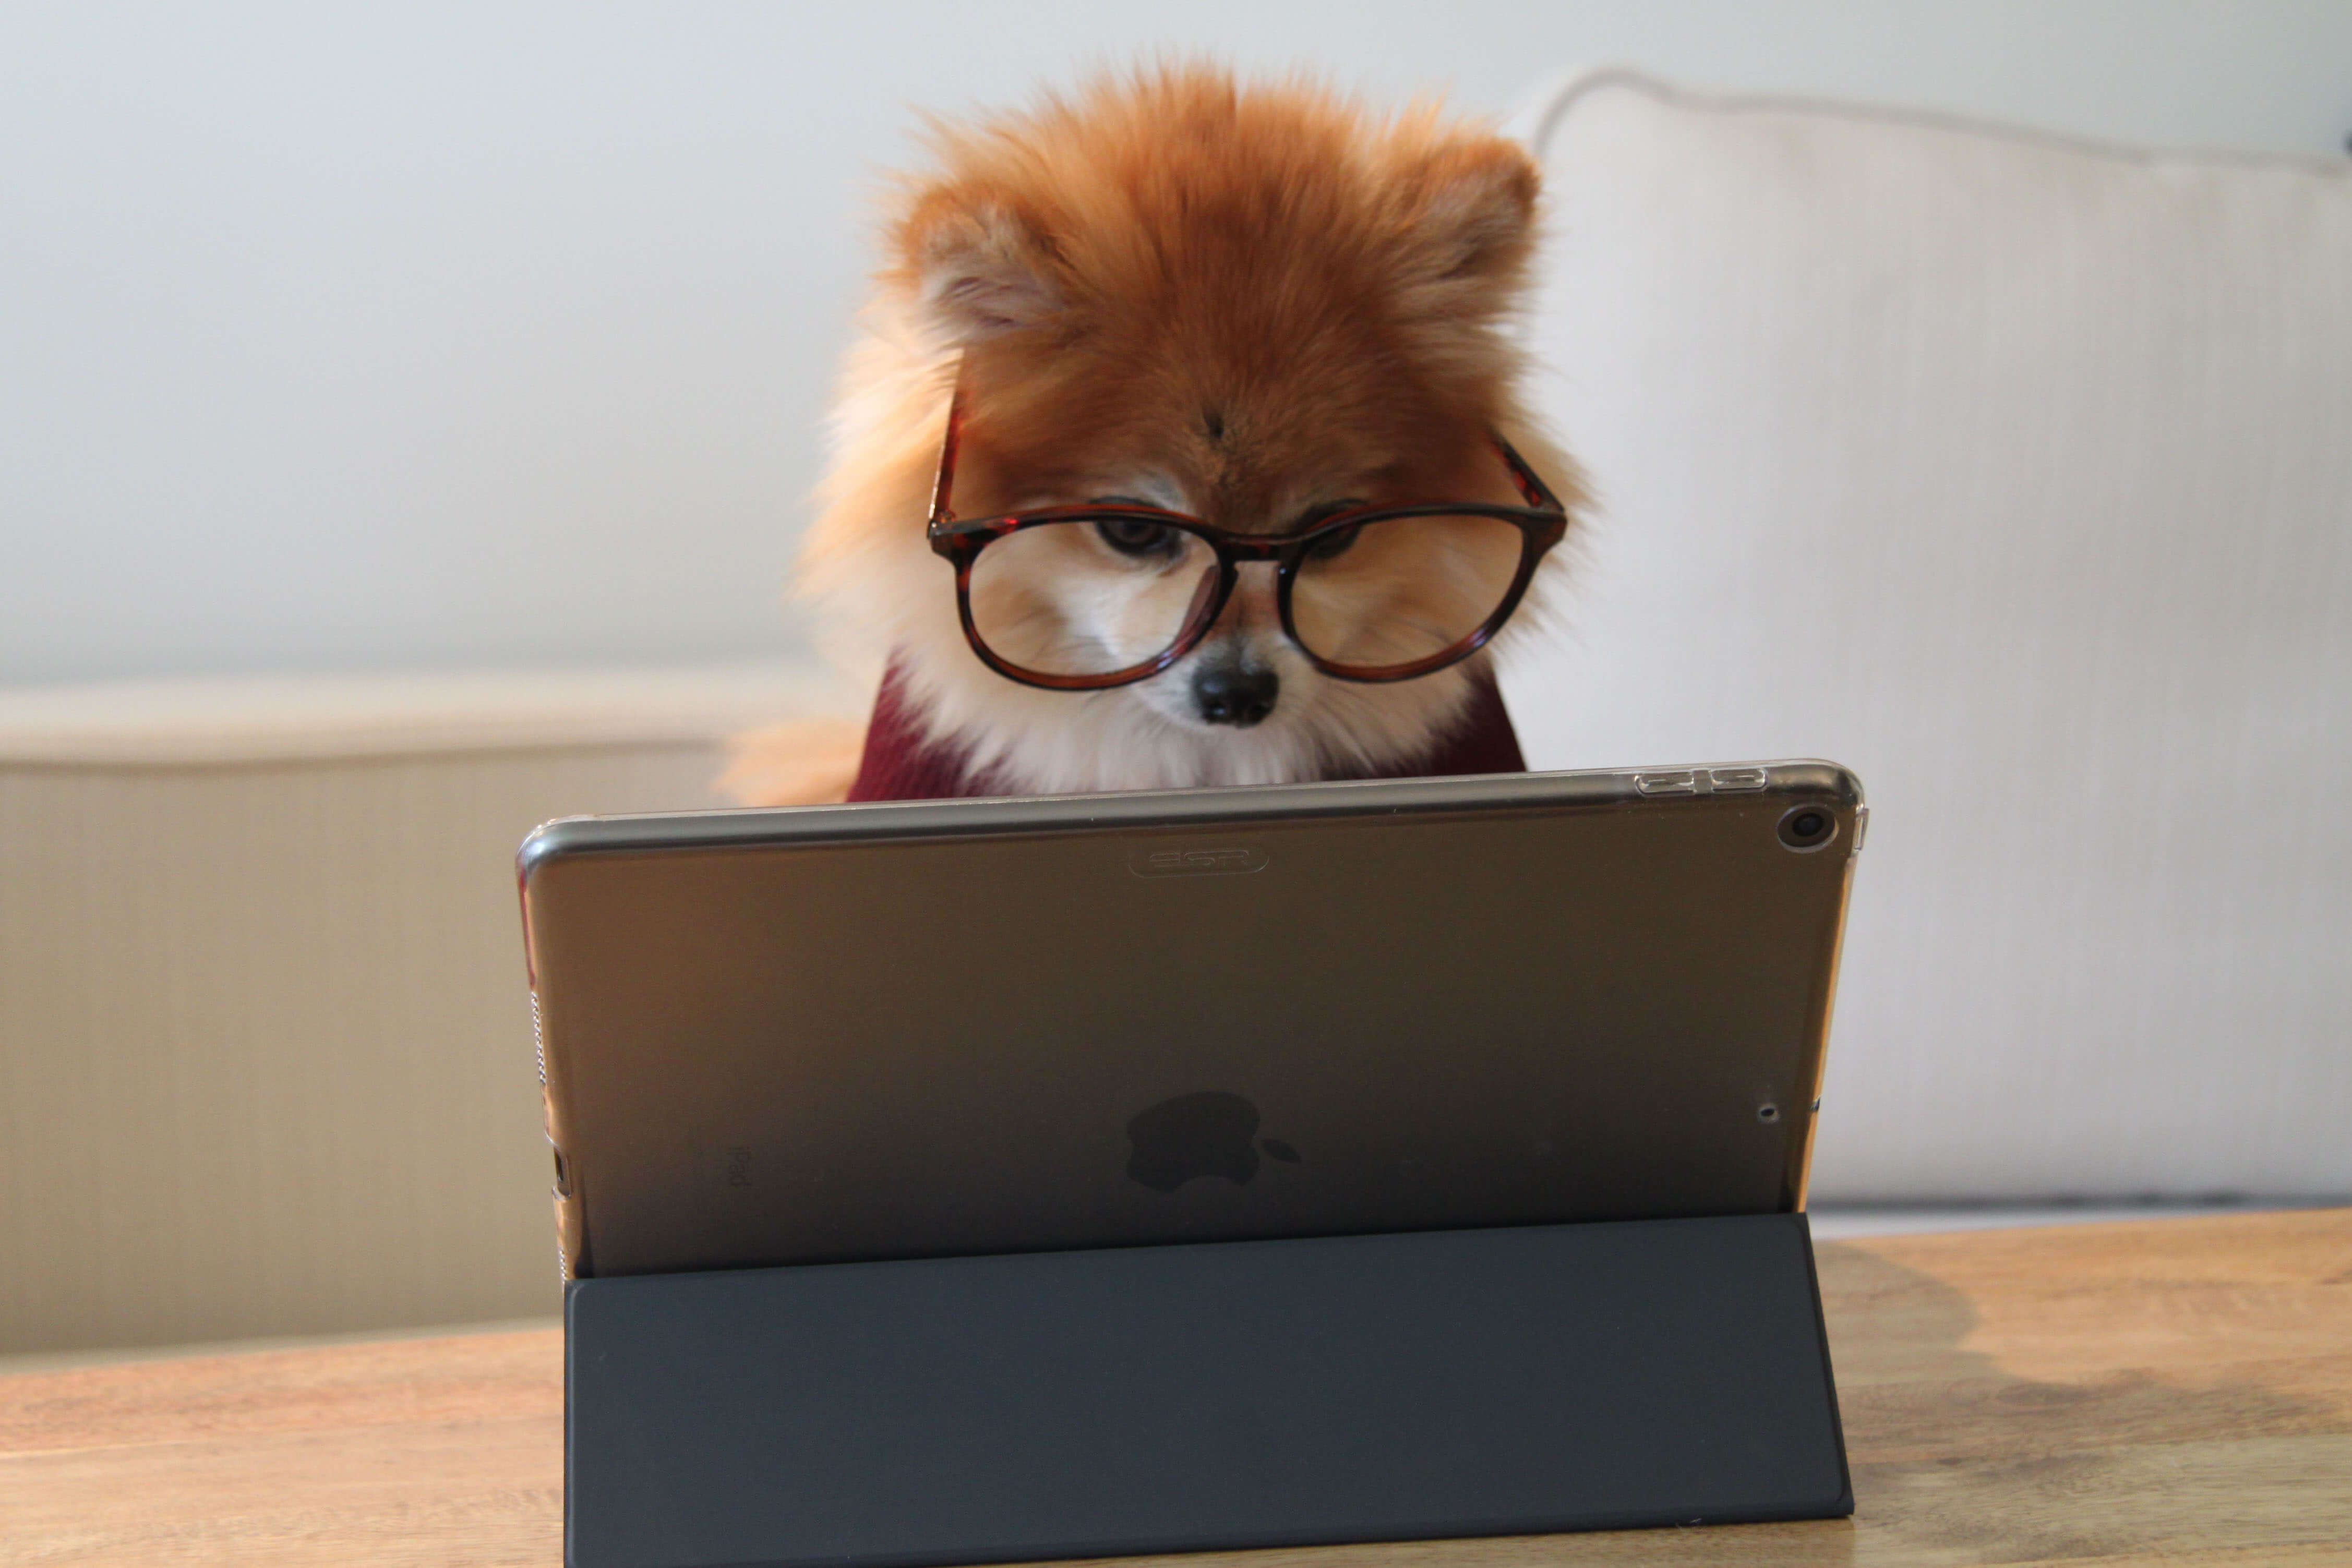 Dog wearing glasses working at iPad